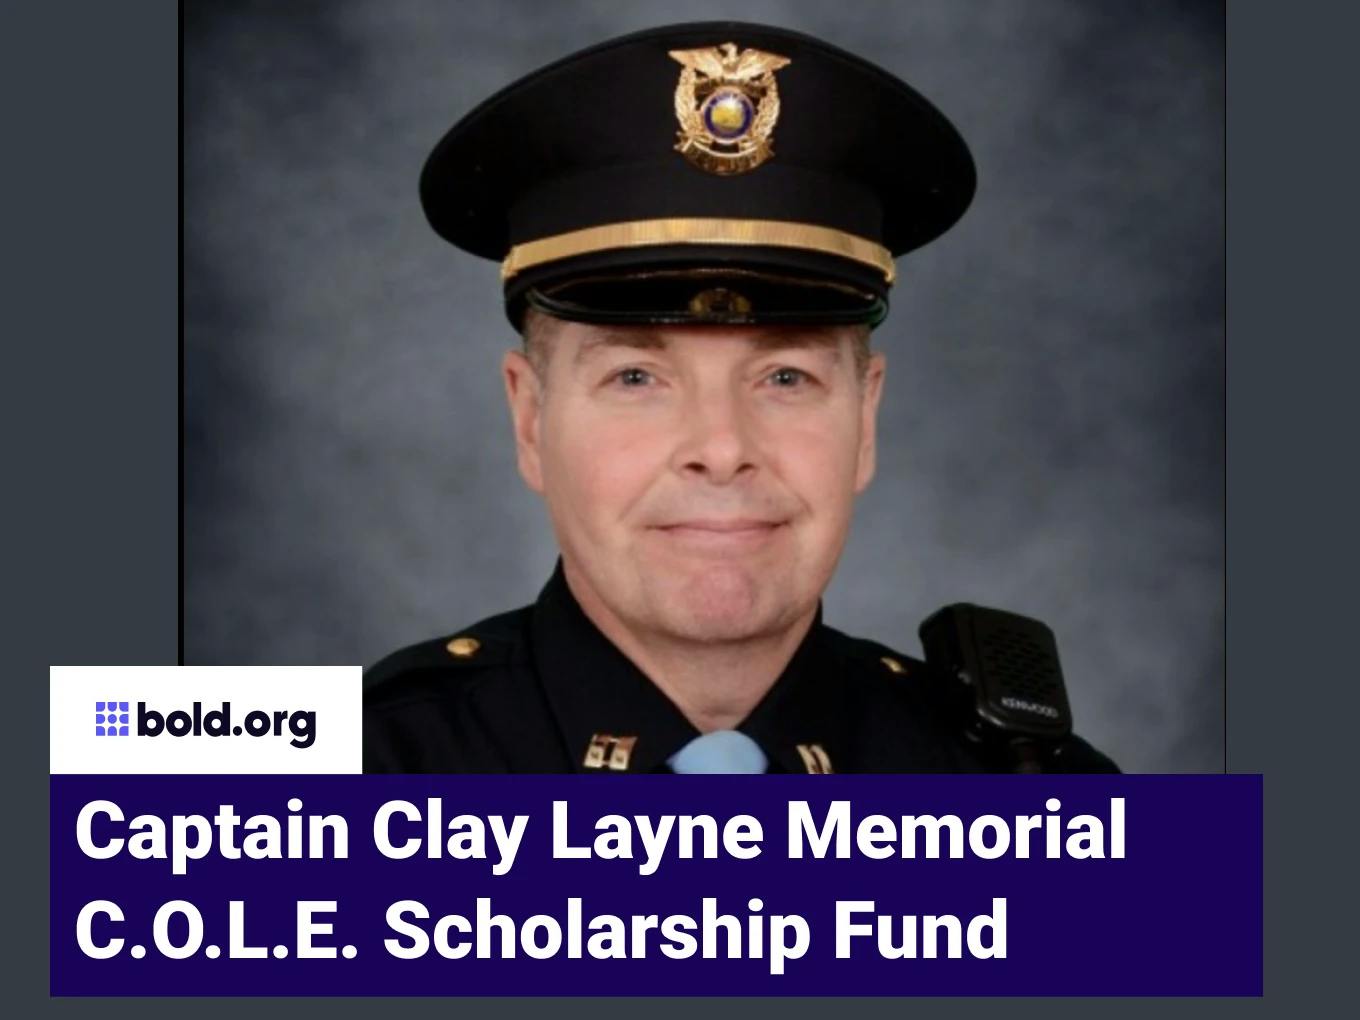 Captain Clay Layne Memorial C.O.L.E. Scholarship Fund